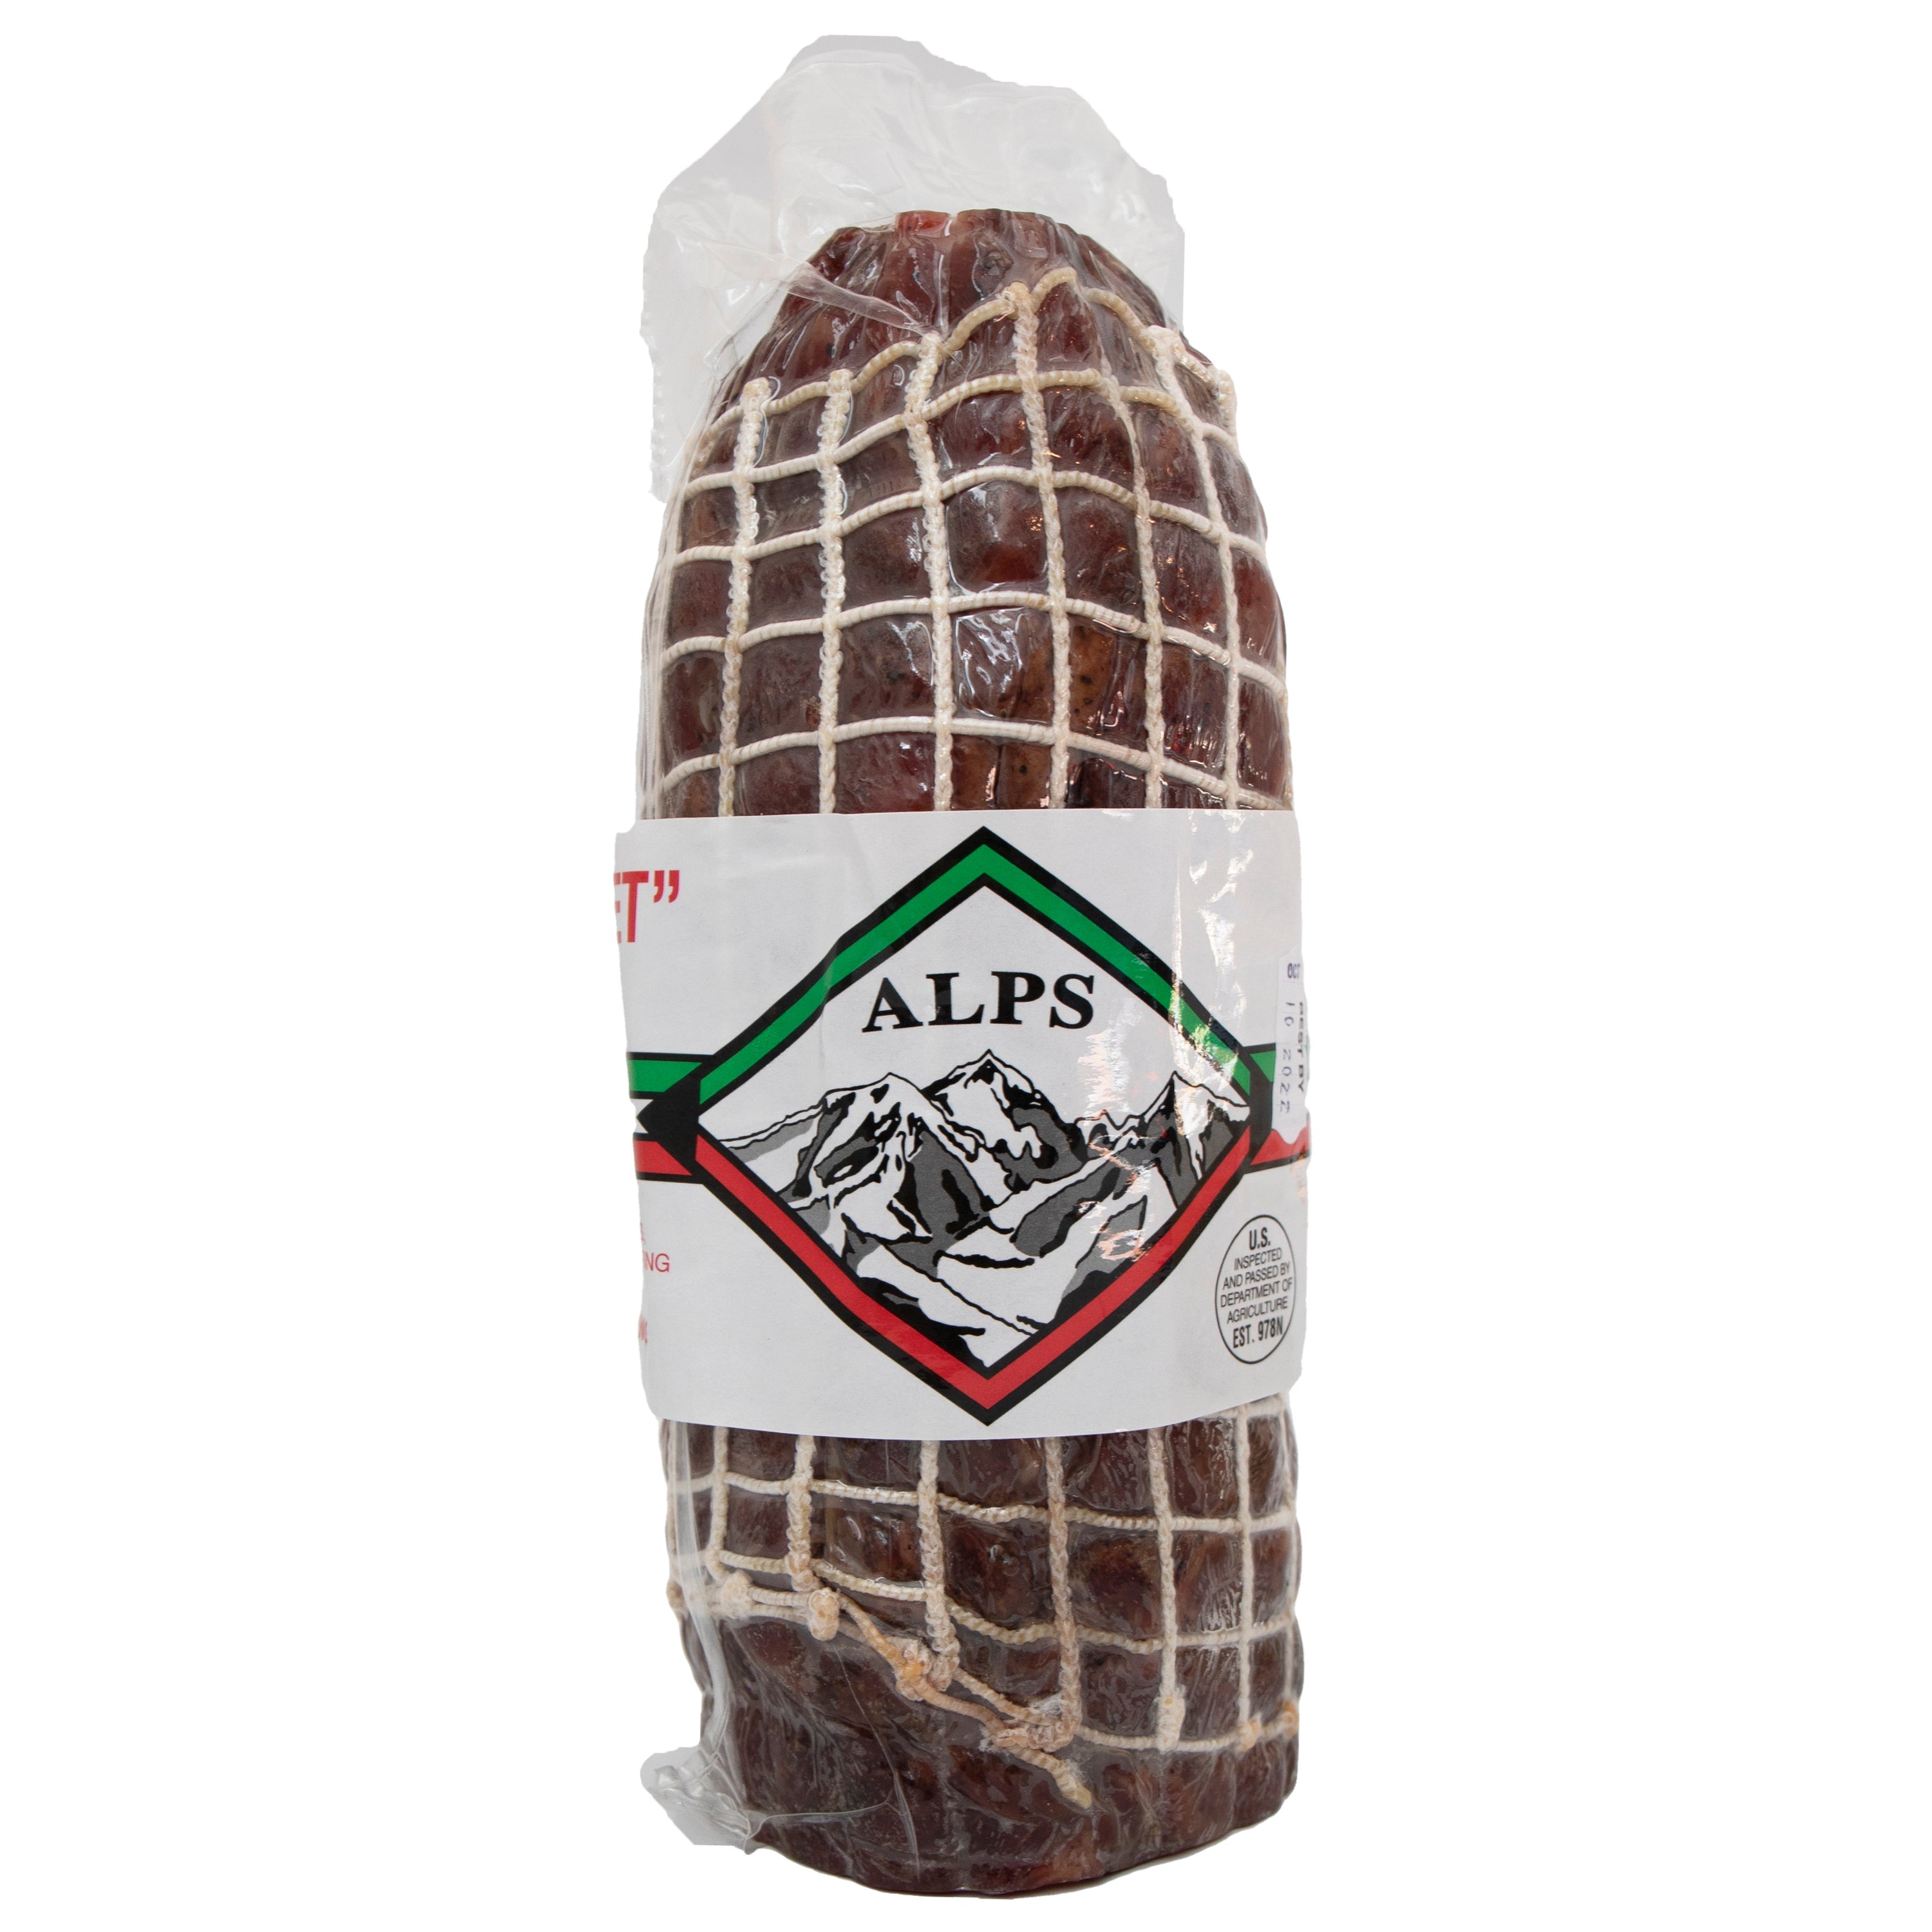 Alps Sweet Capocollo Salami 2.5 lb Pack